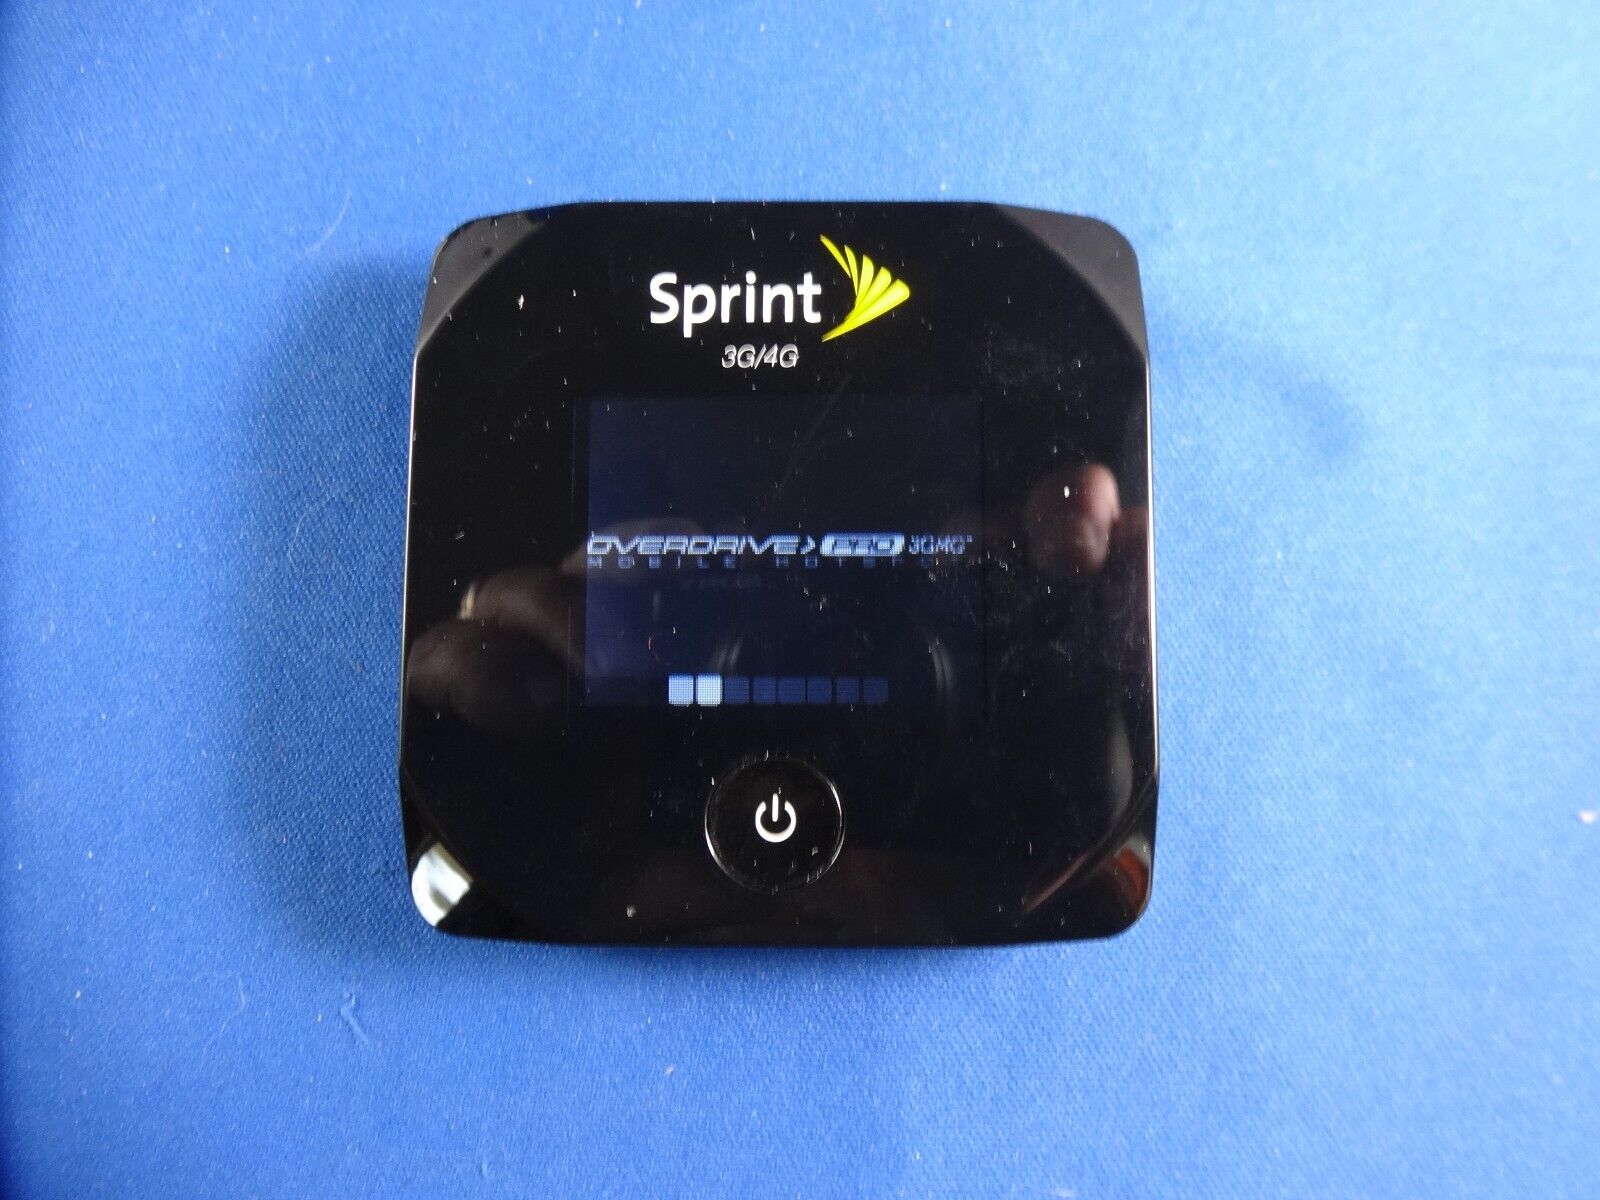 Sprint Overdrive Pro (3G/4G) Mobile Hotspot (Sierra Wireless) Pro SWAC802. K